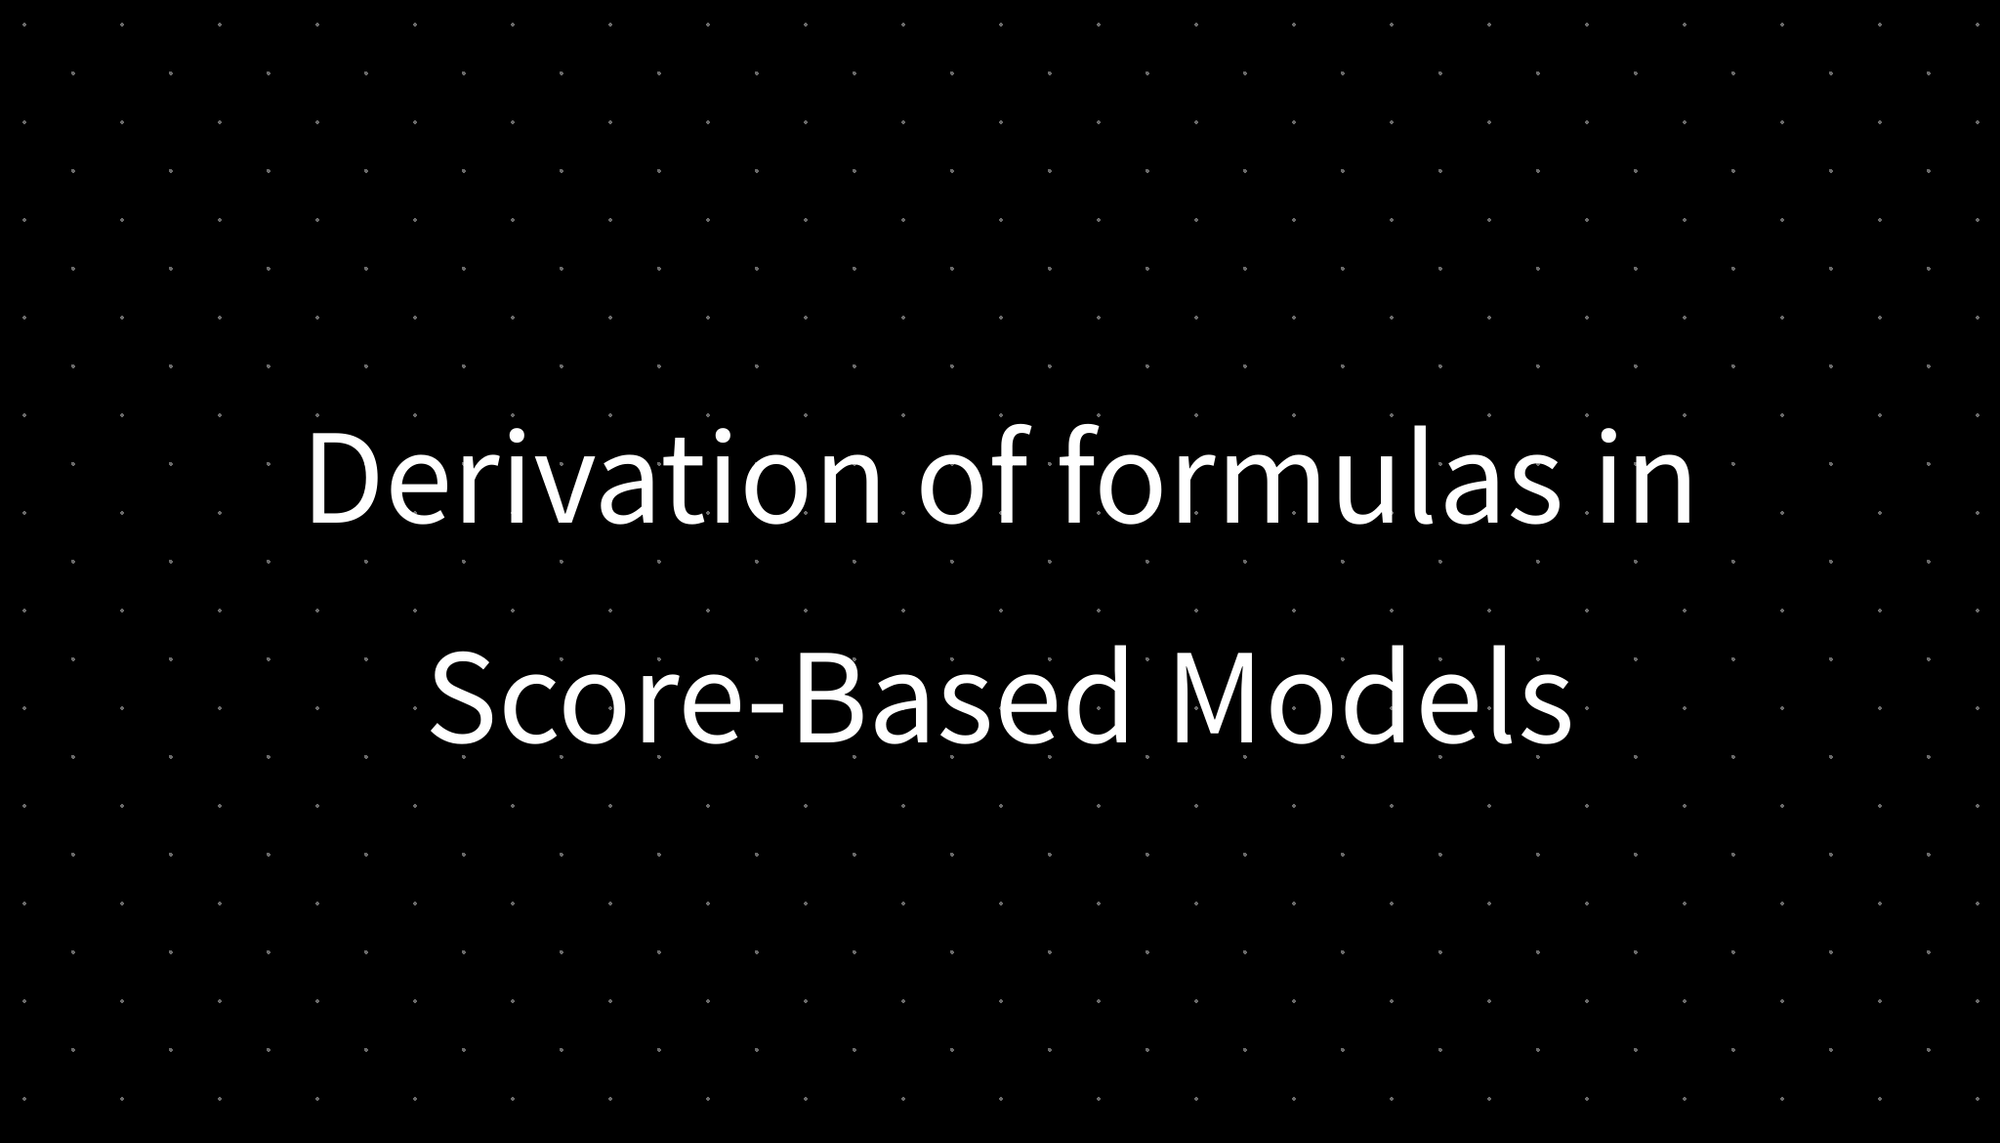 Derivation of formulas in Score-Based Models